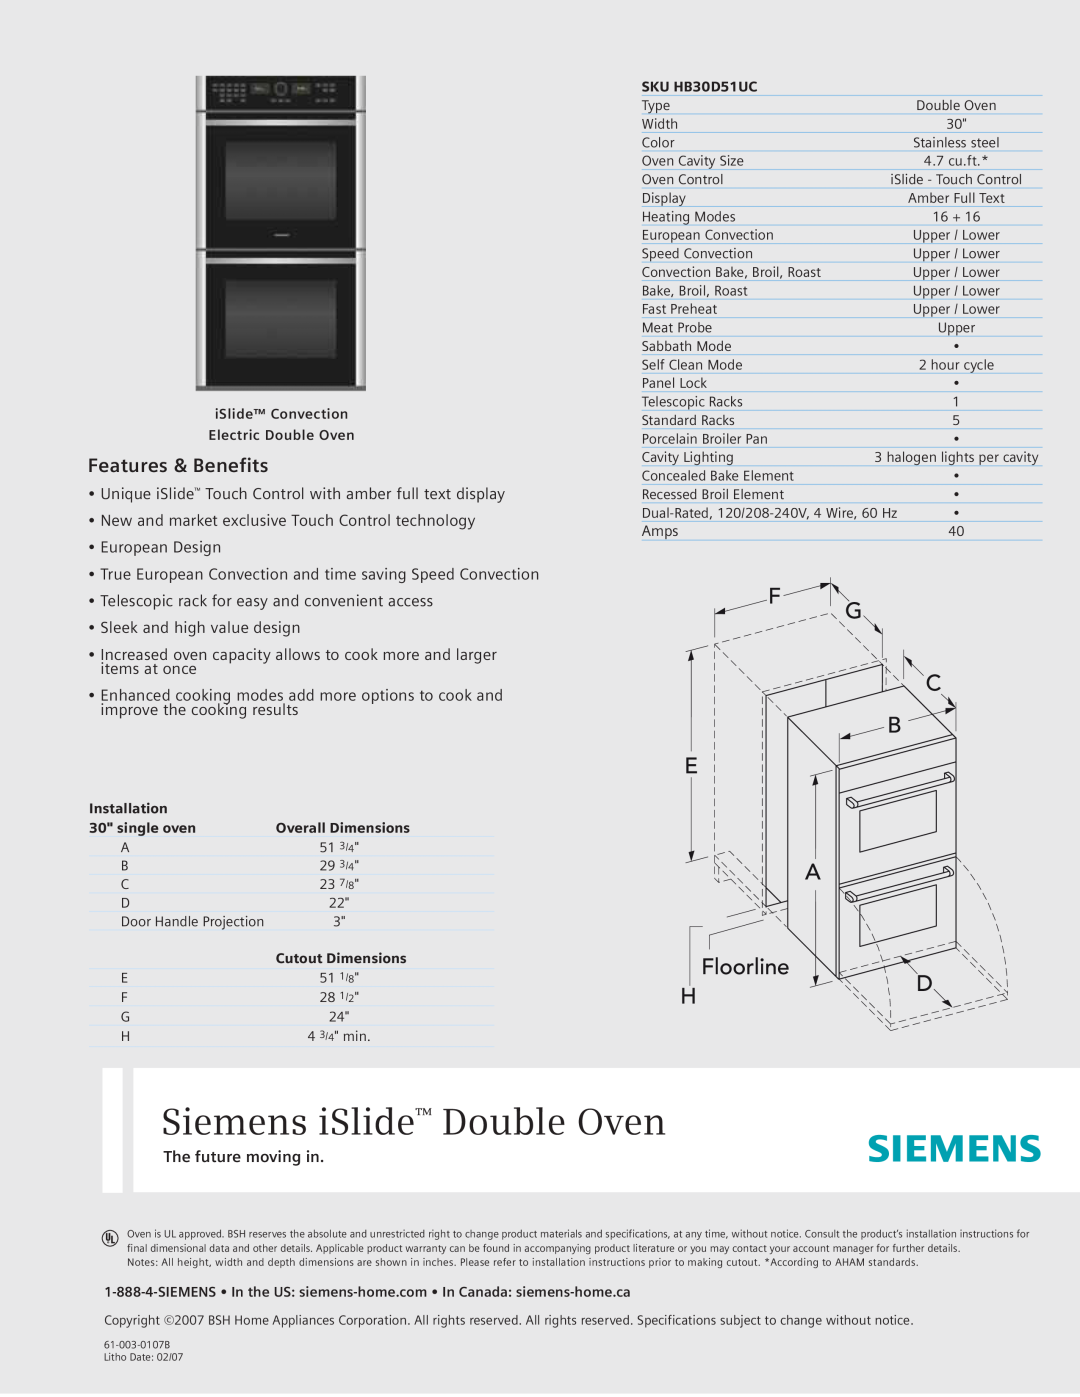 Siemens SKU HB30D51UC specifications Siemens iSlide Double Oven, Features & Benefits, Sleek and high value design 